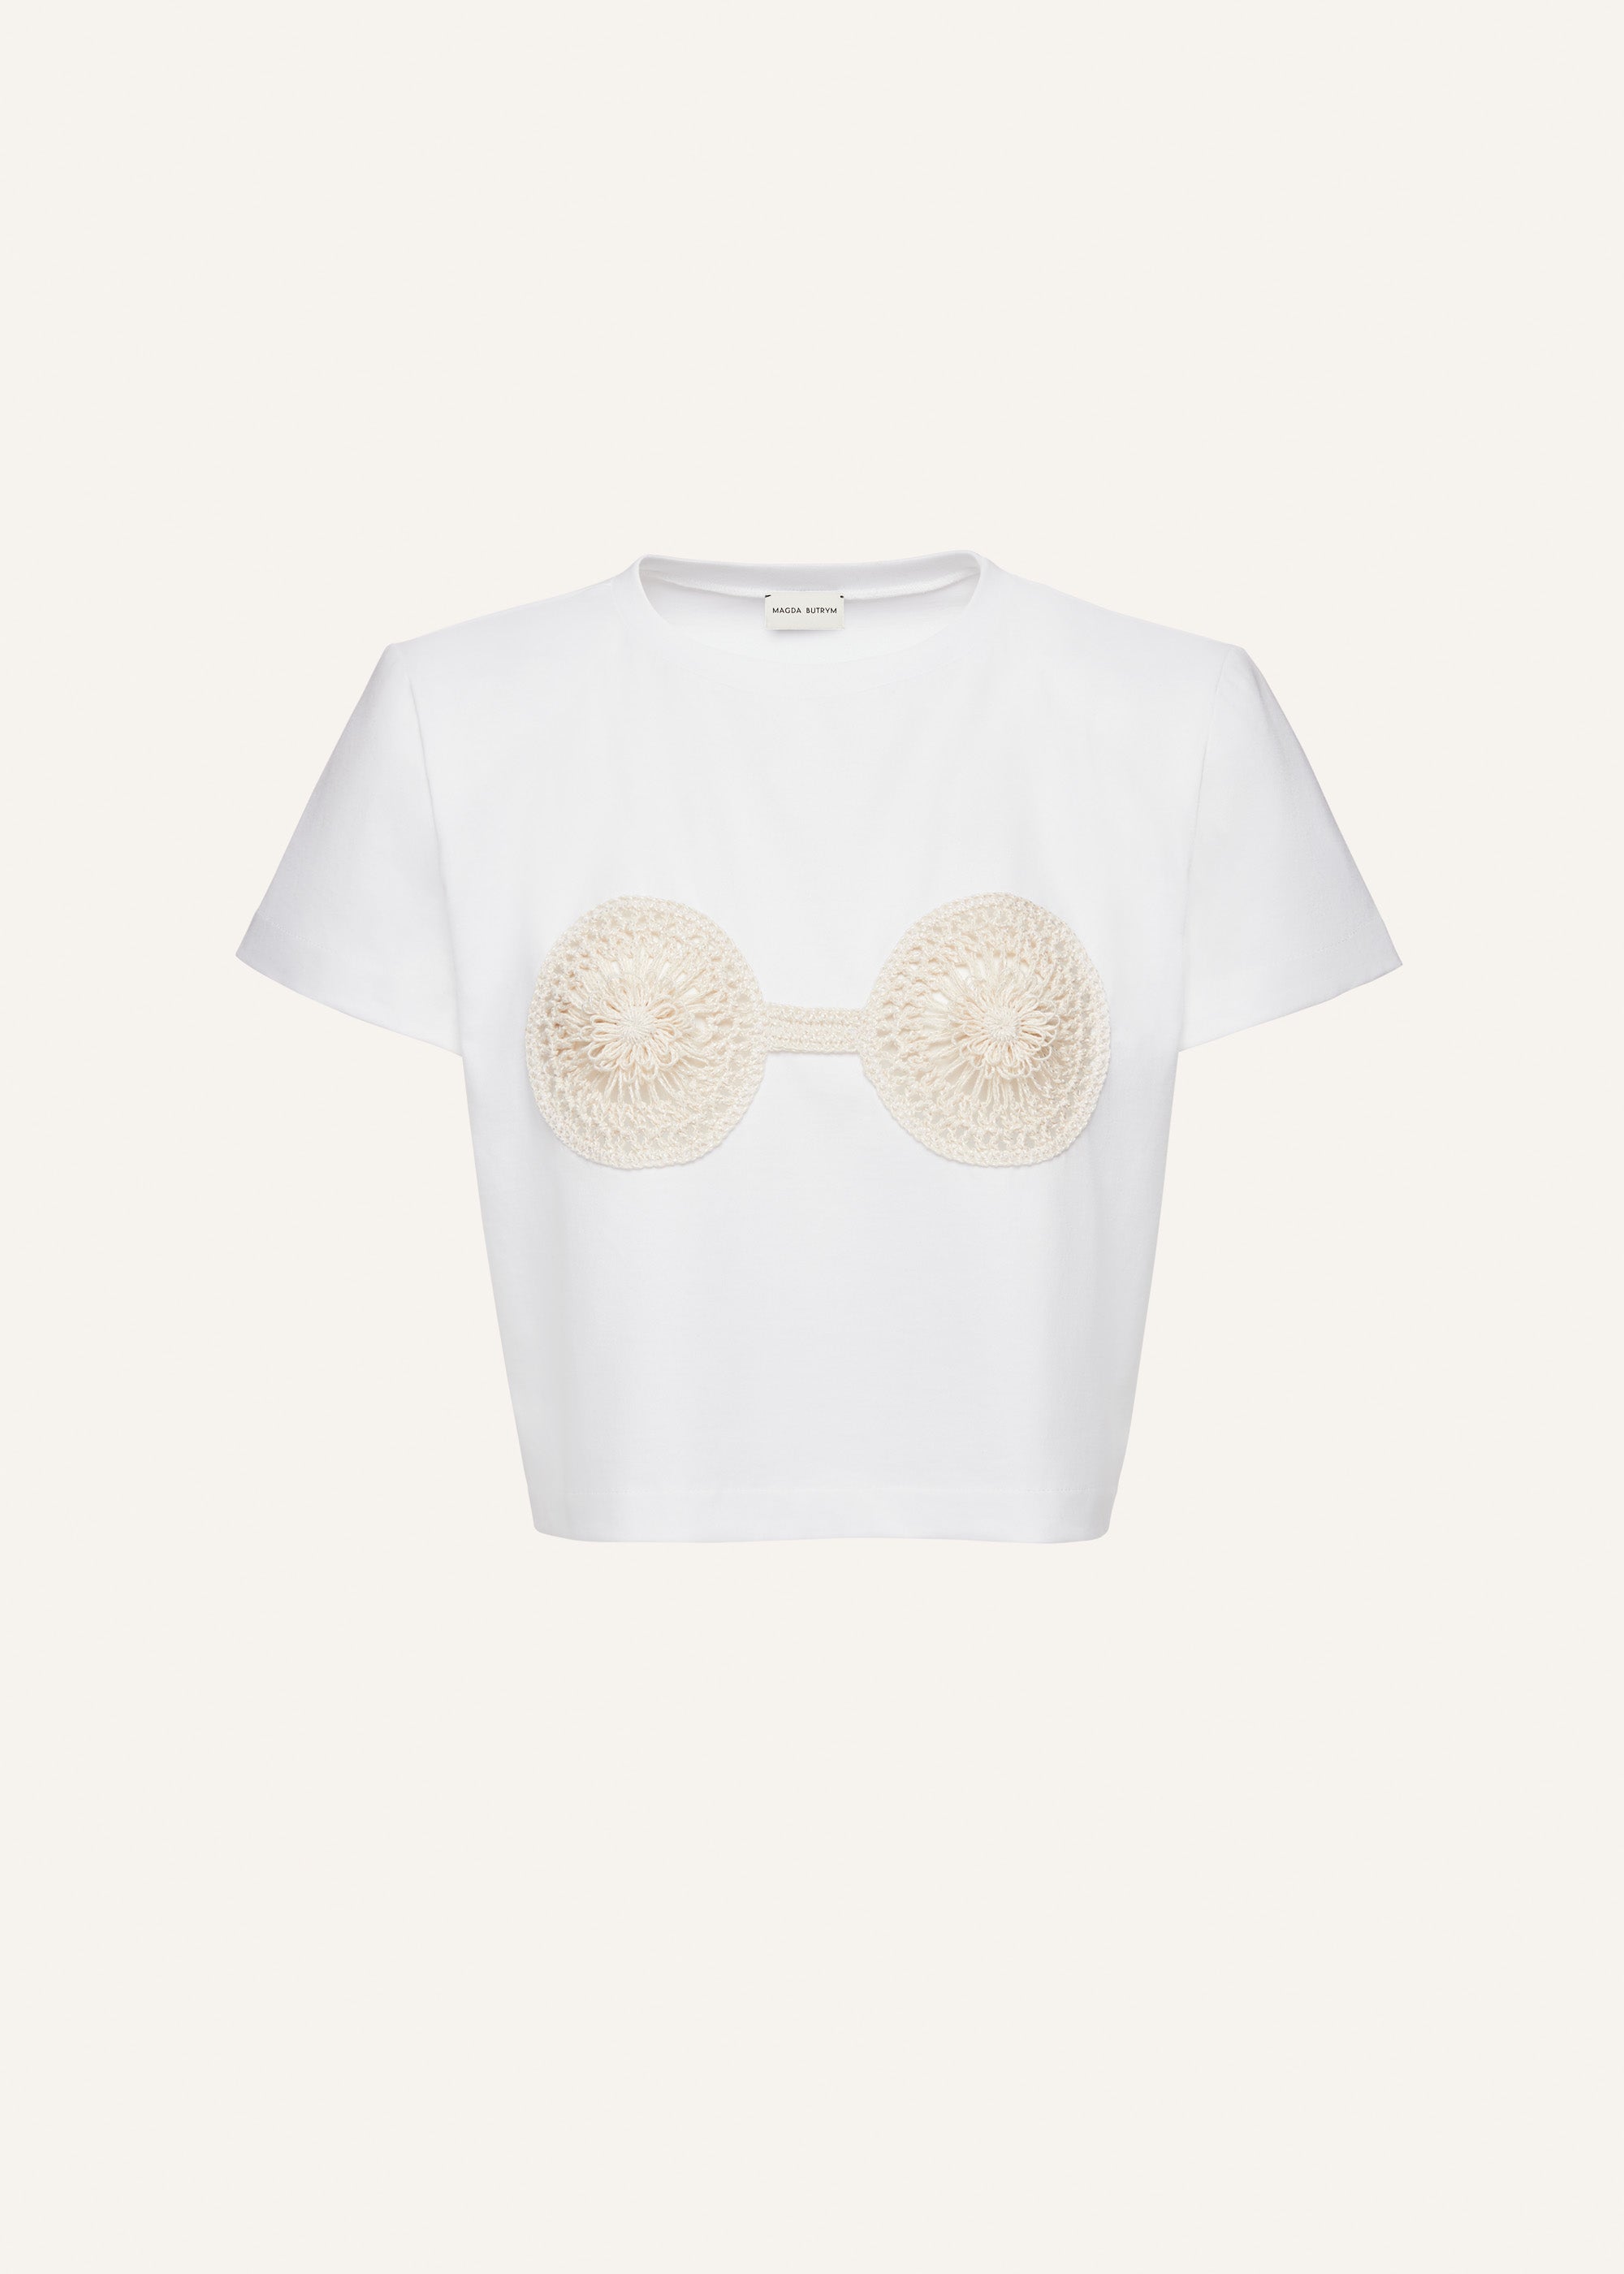 Crochet bra t-shirt in white | Magda Butrym